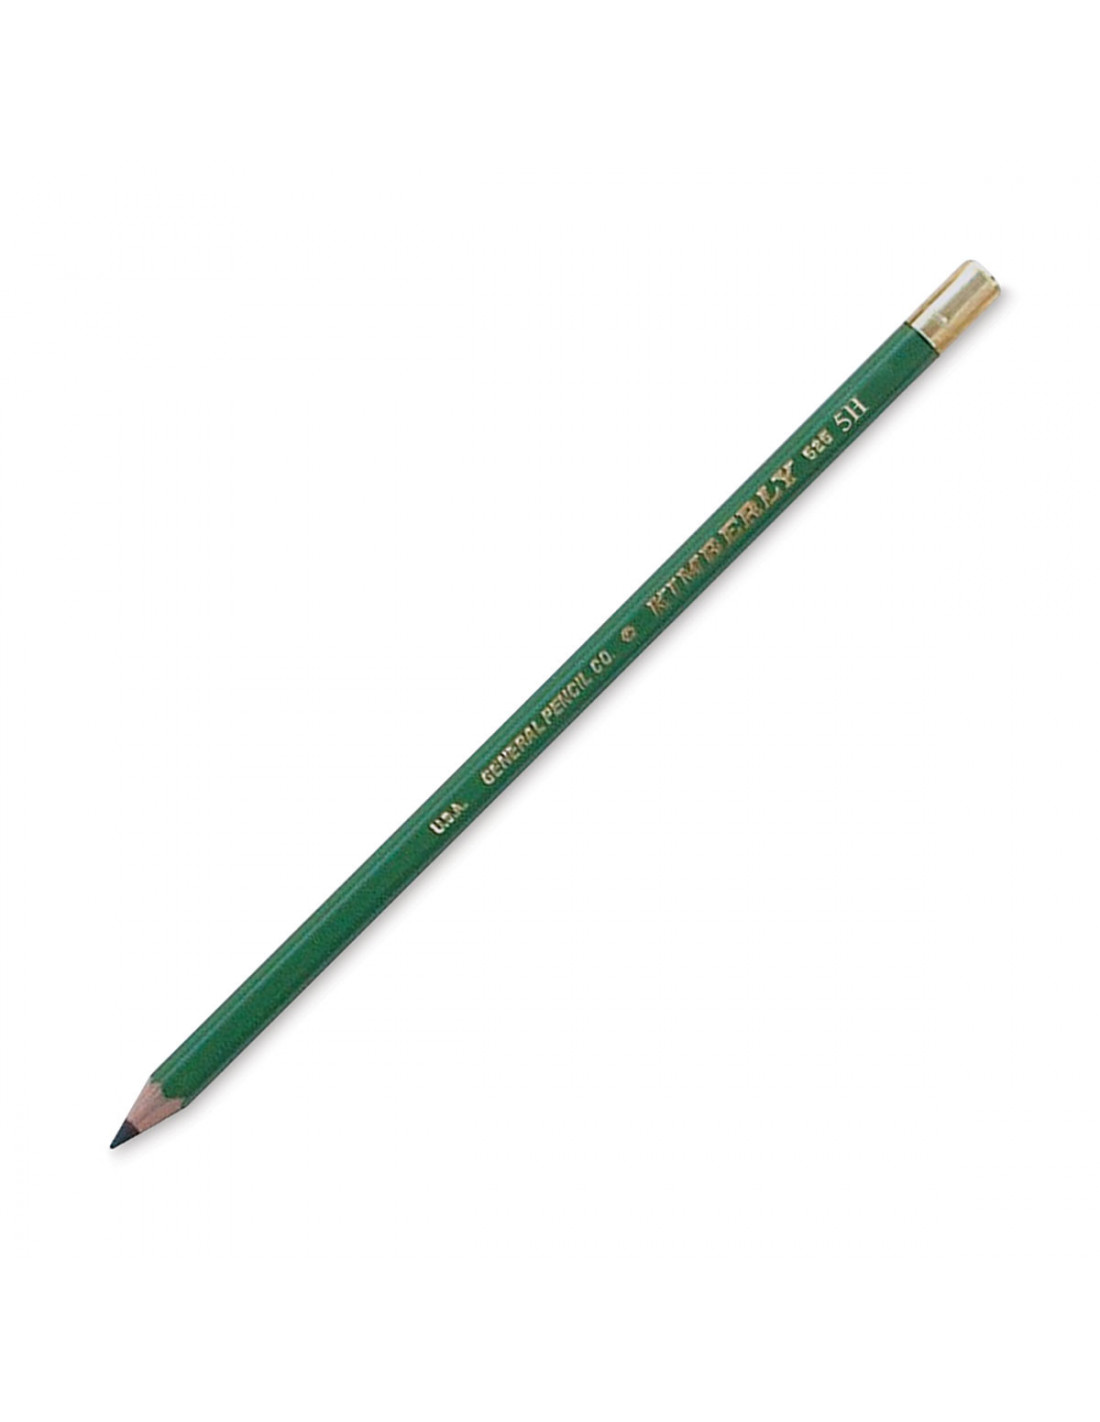 5H Graphite Pencil - Kimberly 525 - General Pencil Company